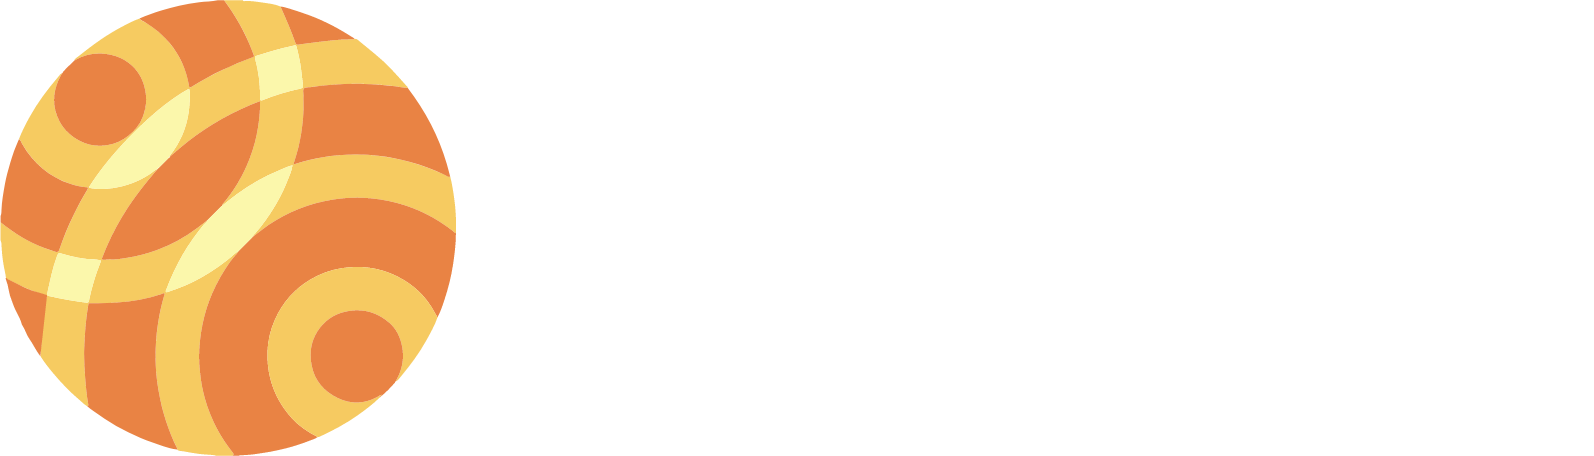 Bank of Ningbo
 logo grand pour les fonds sombres (PNG transparent)